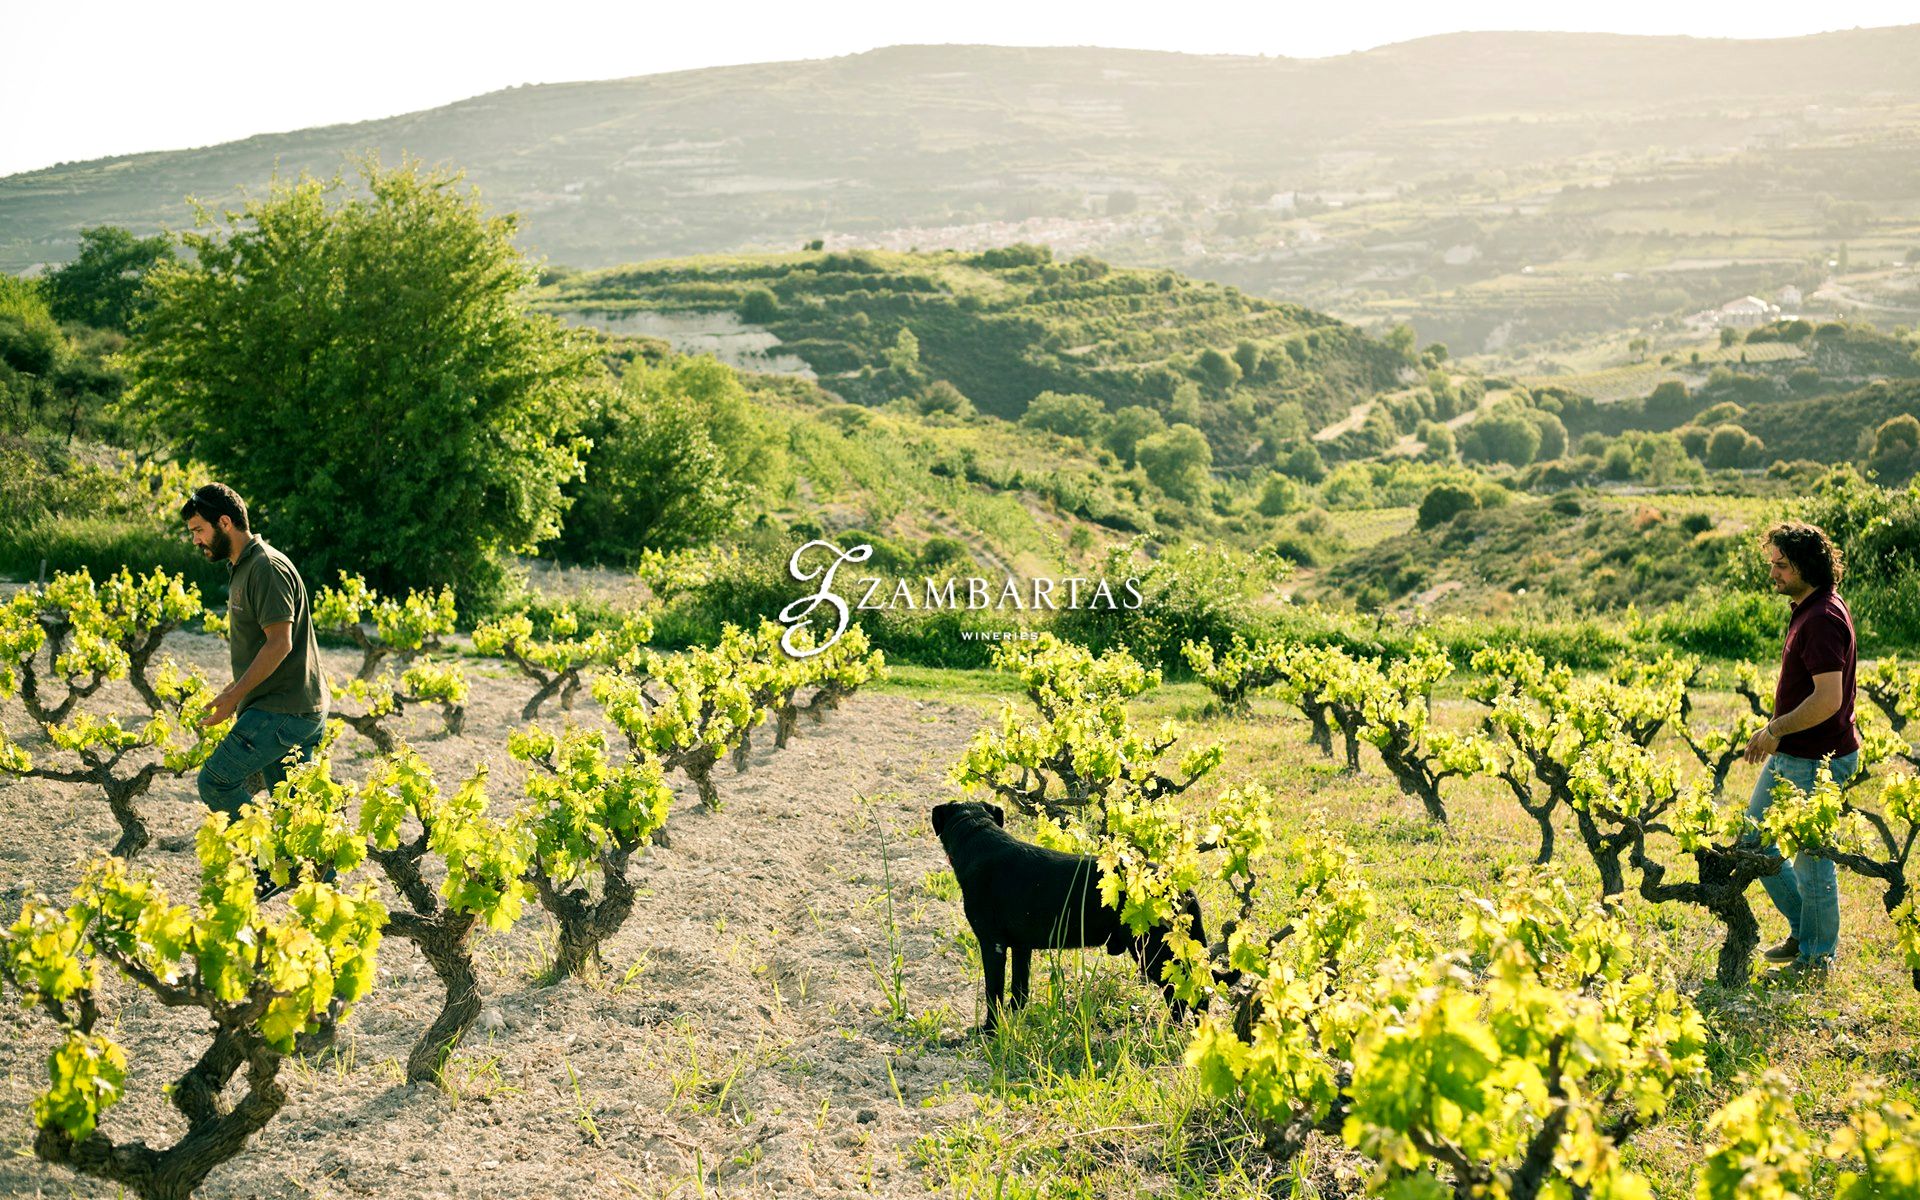 Zambartas Winery in Cyprus